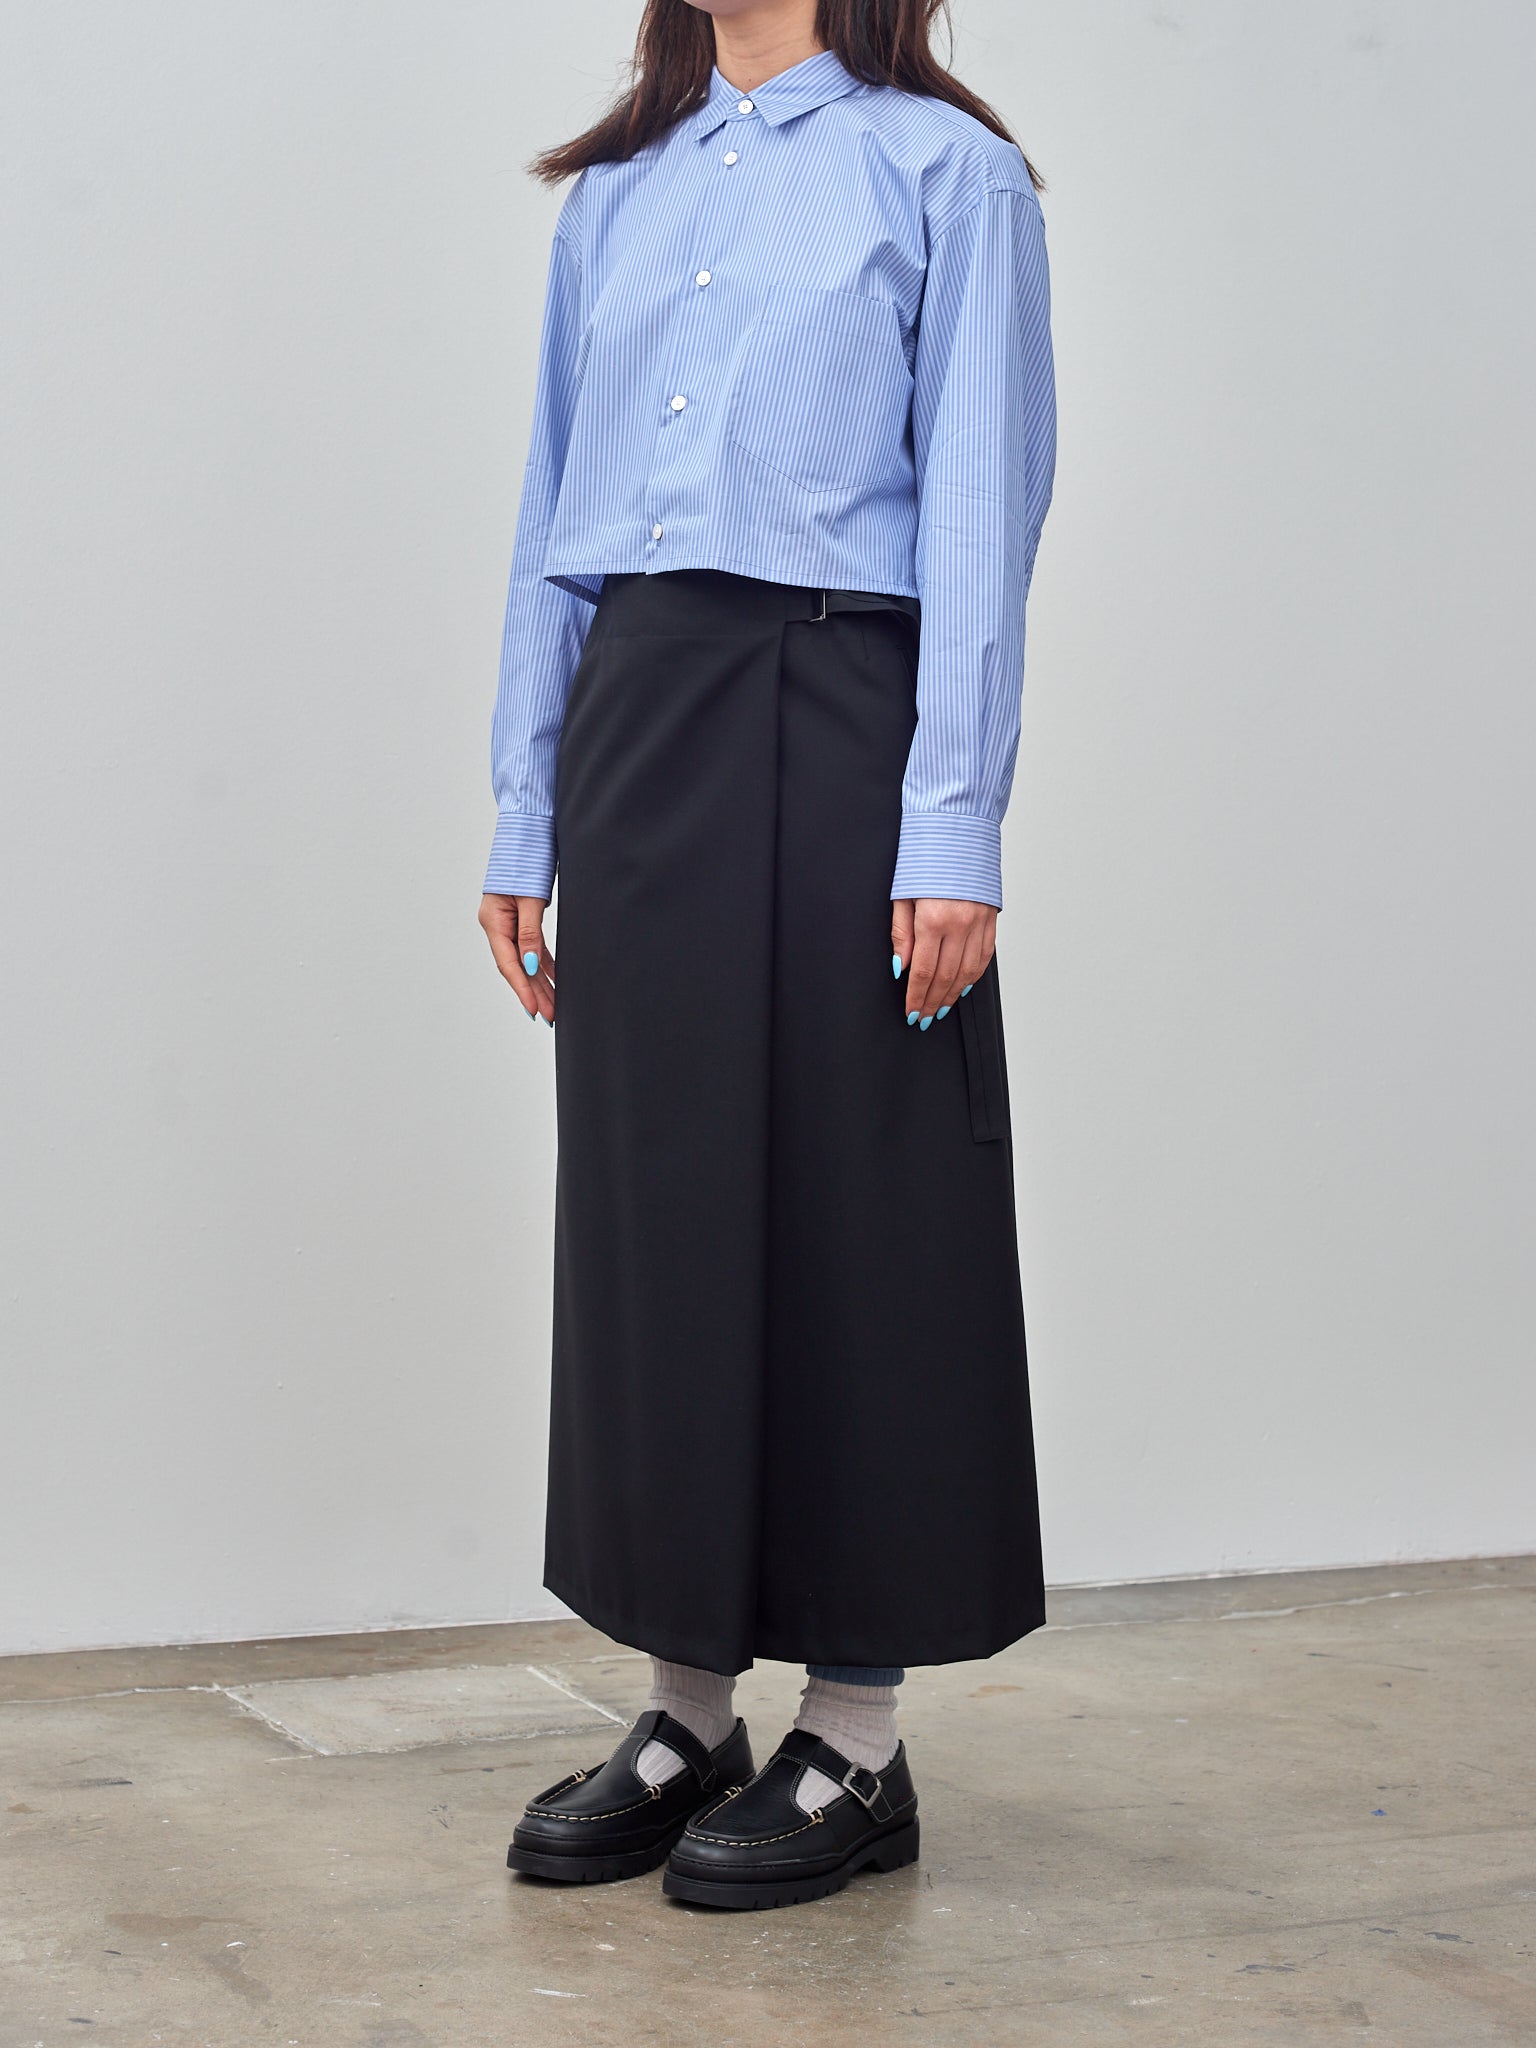 Namu Shop - Aton Wool Tropical Washed Skirt - Black